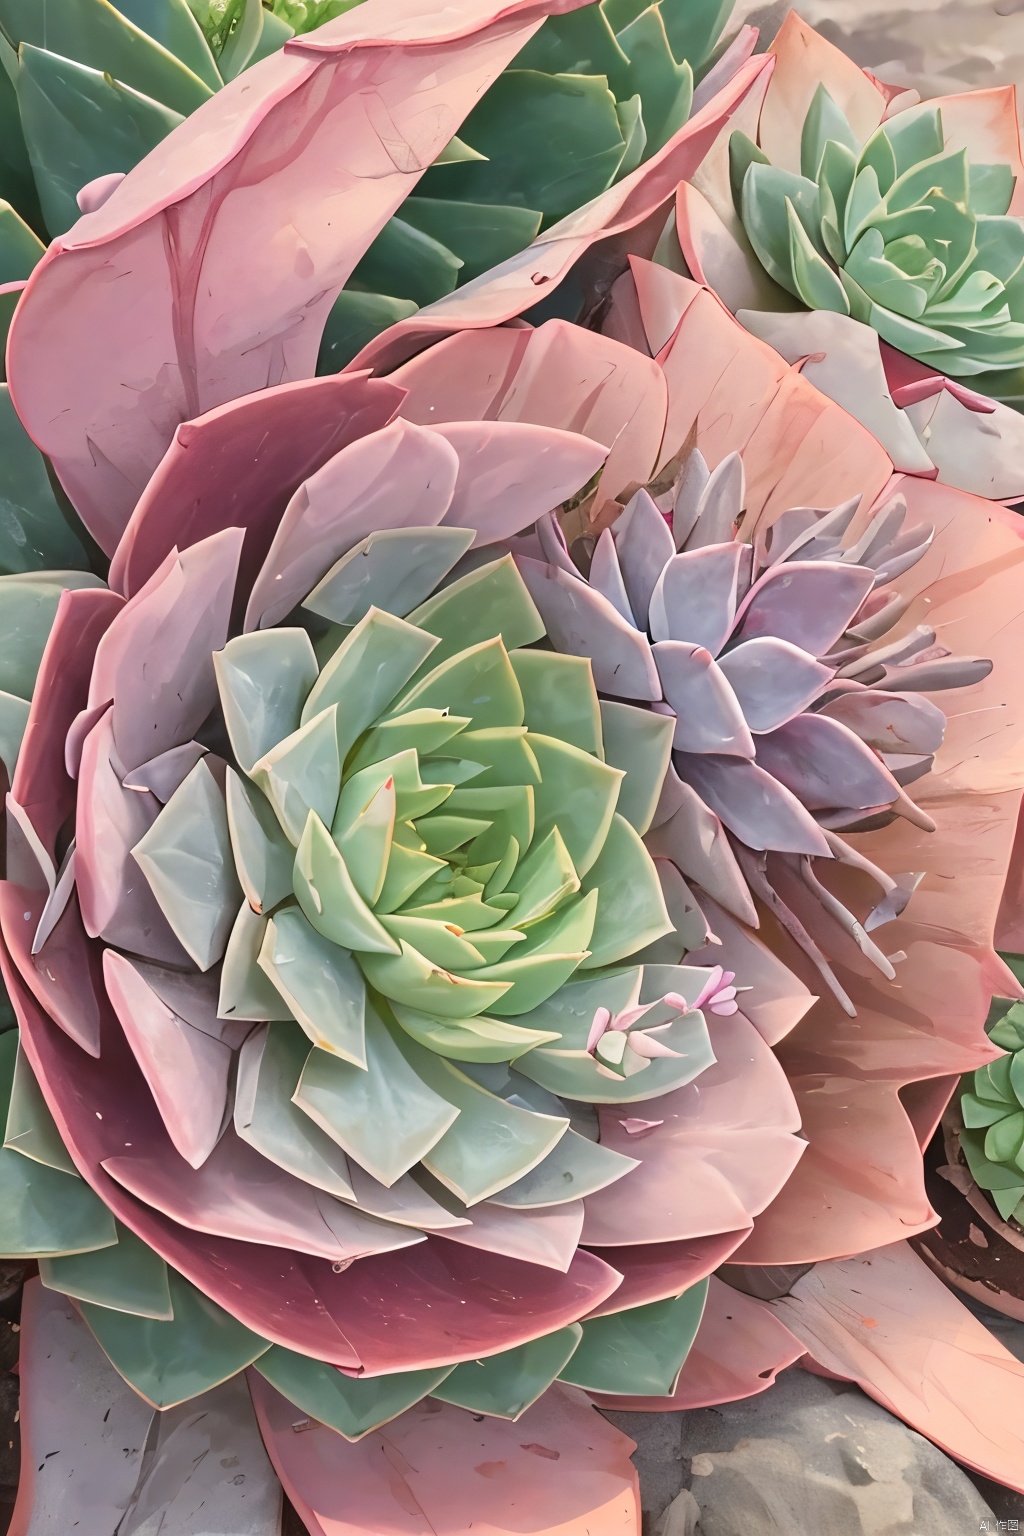 Succulent_Plants,succulent plants,(pink-blue-red-purple-green leaf),close-up, macro shot, outdoor